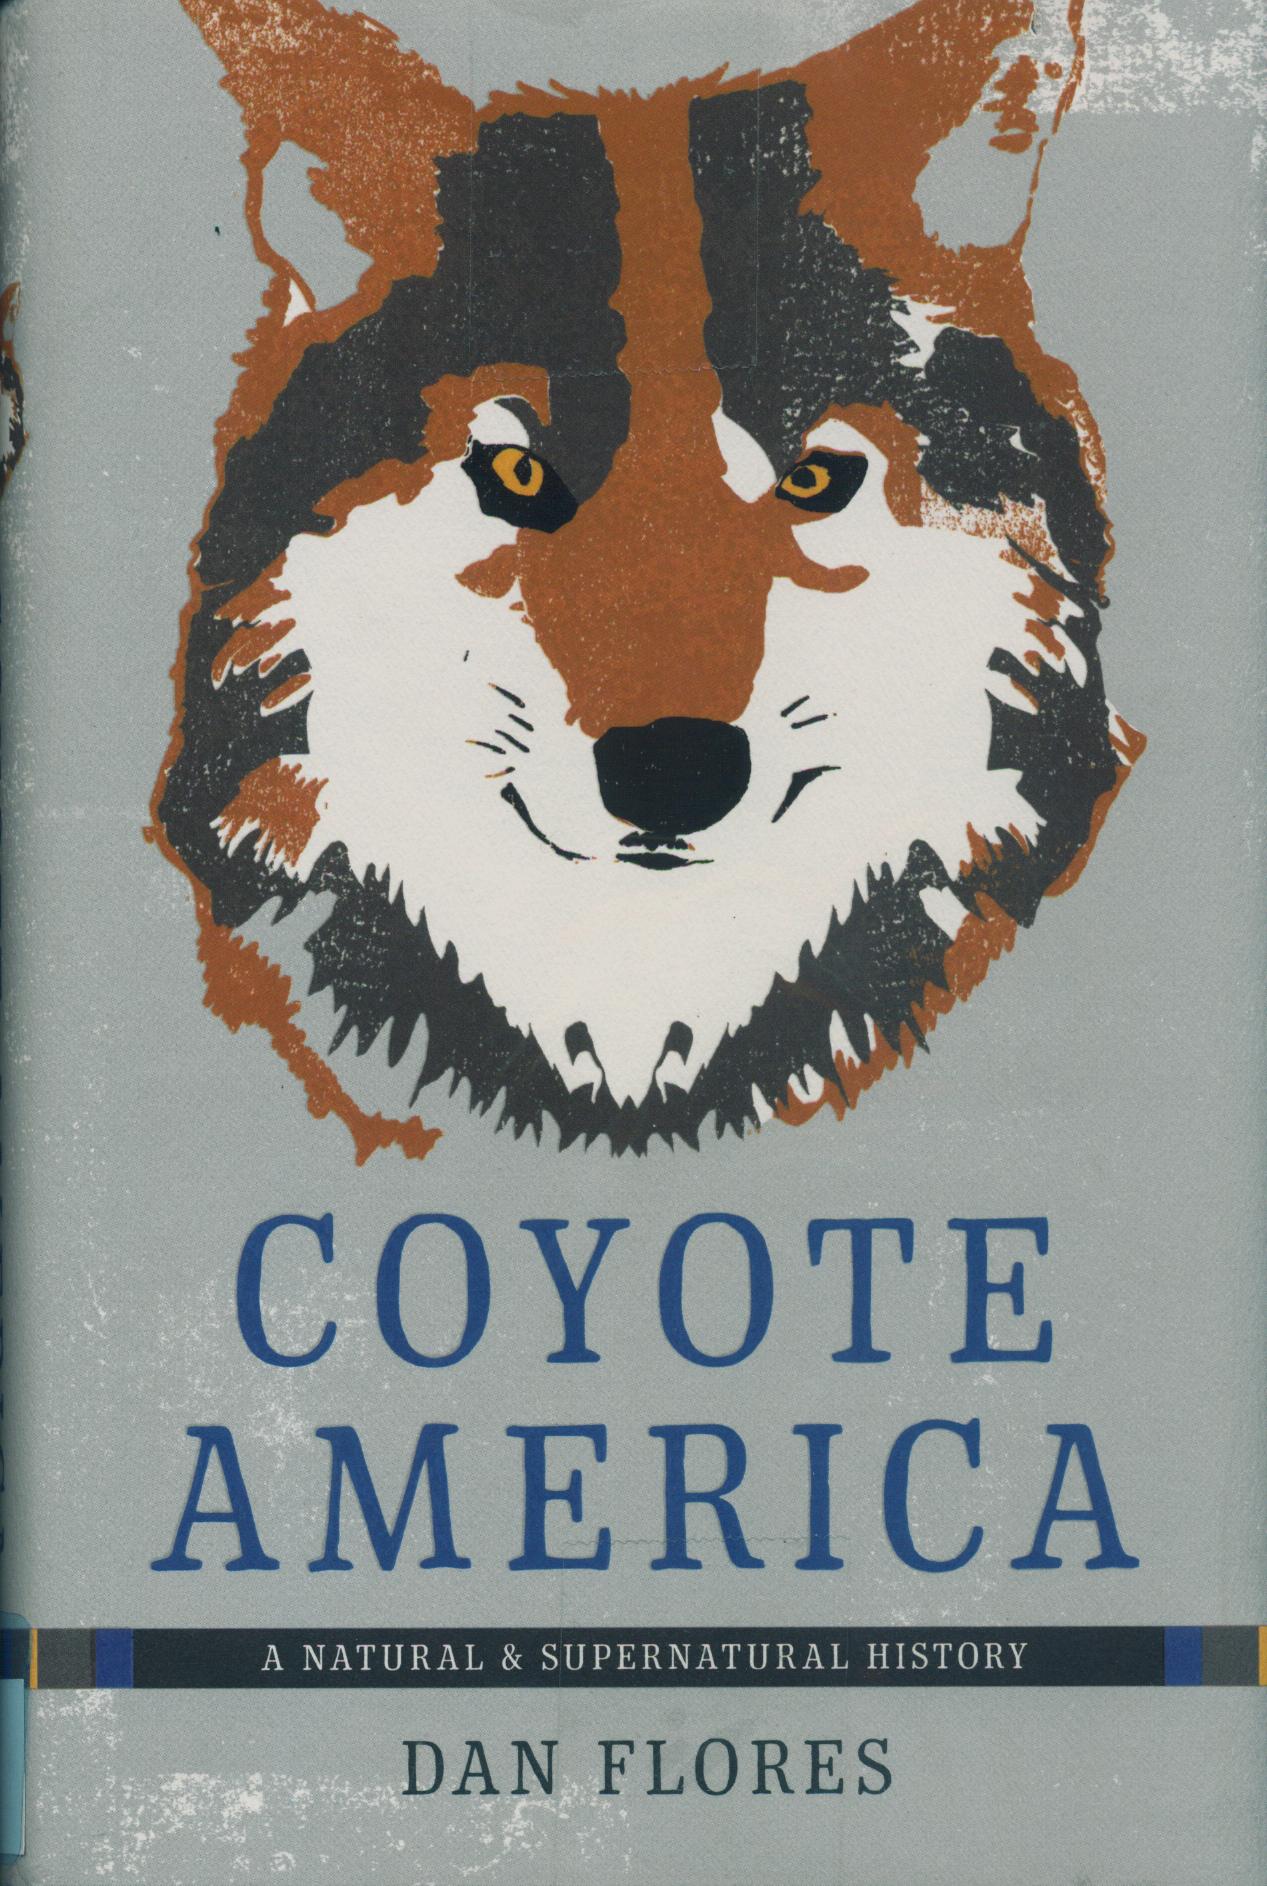 Coyote America: A Natural & Supernatural History